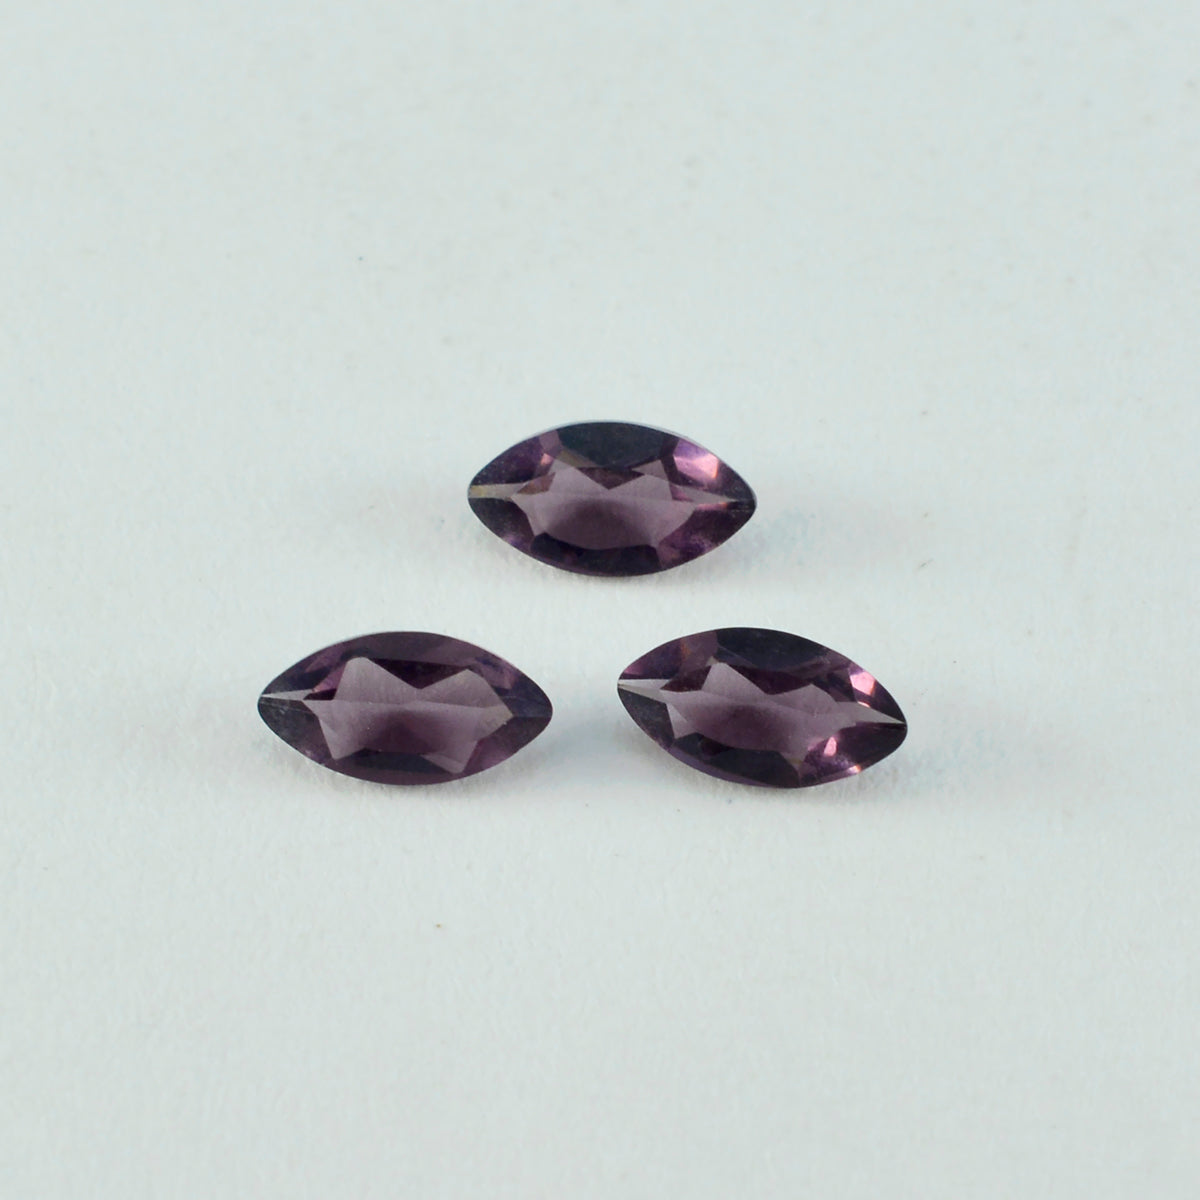 Riyogems 1PC Purple Amethyst CZ Faceted 8x16 mm Marquise Shape excellent Quality Gemstone